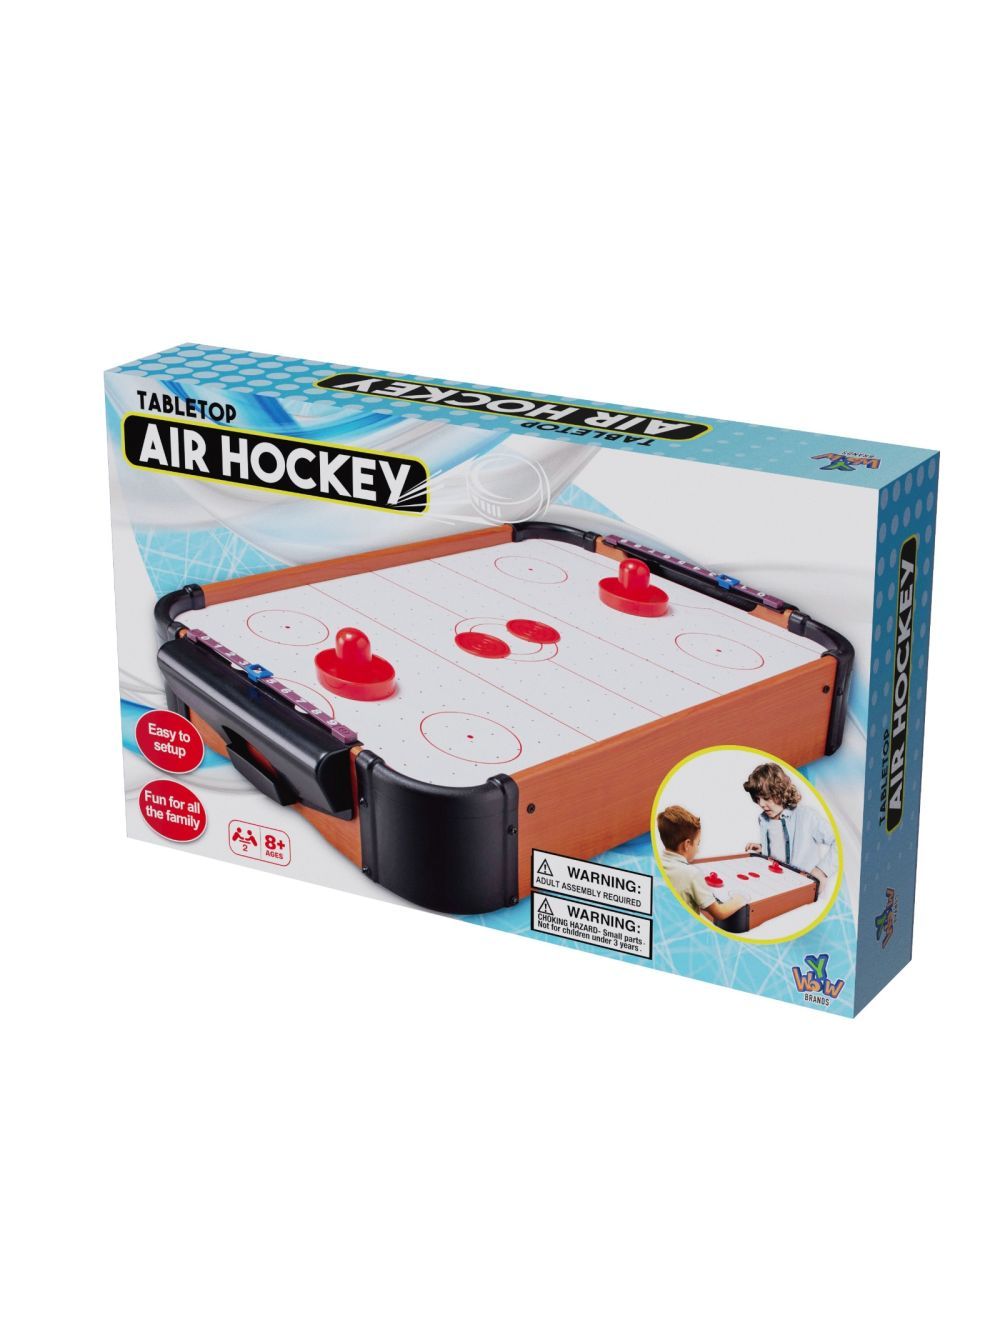 Wooden Tabletop Air Hockey